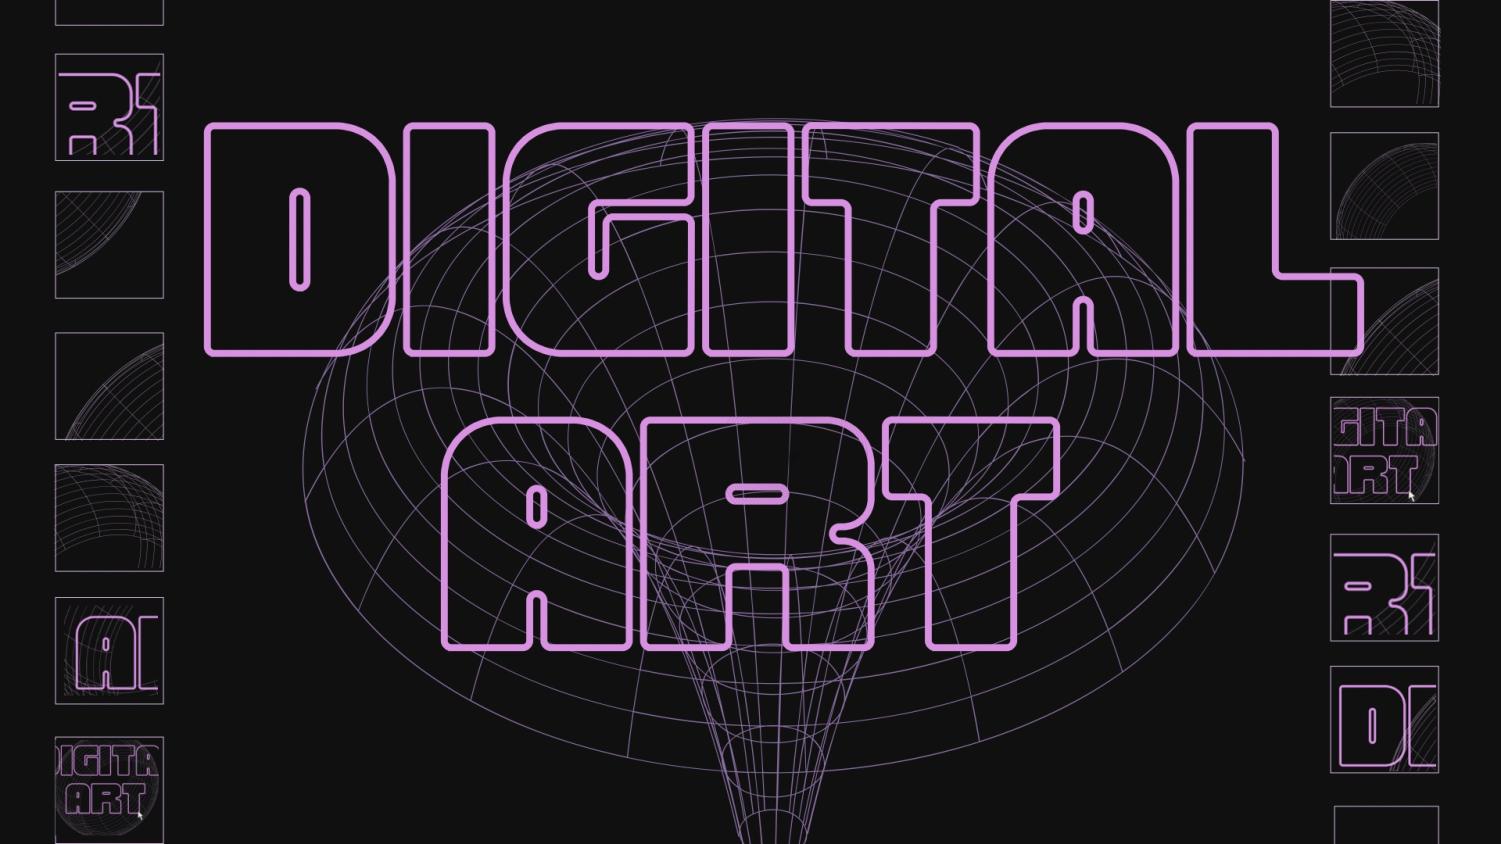 Creating art in a digital age